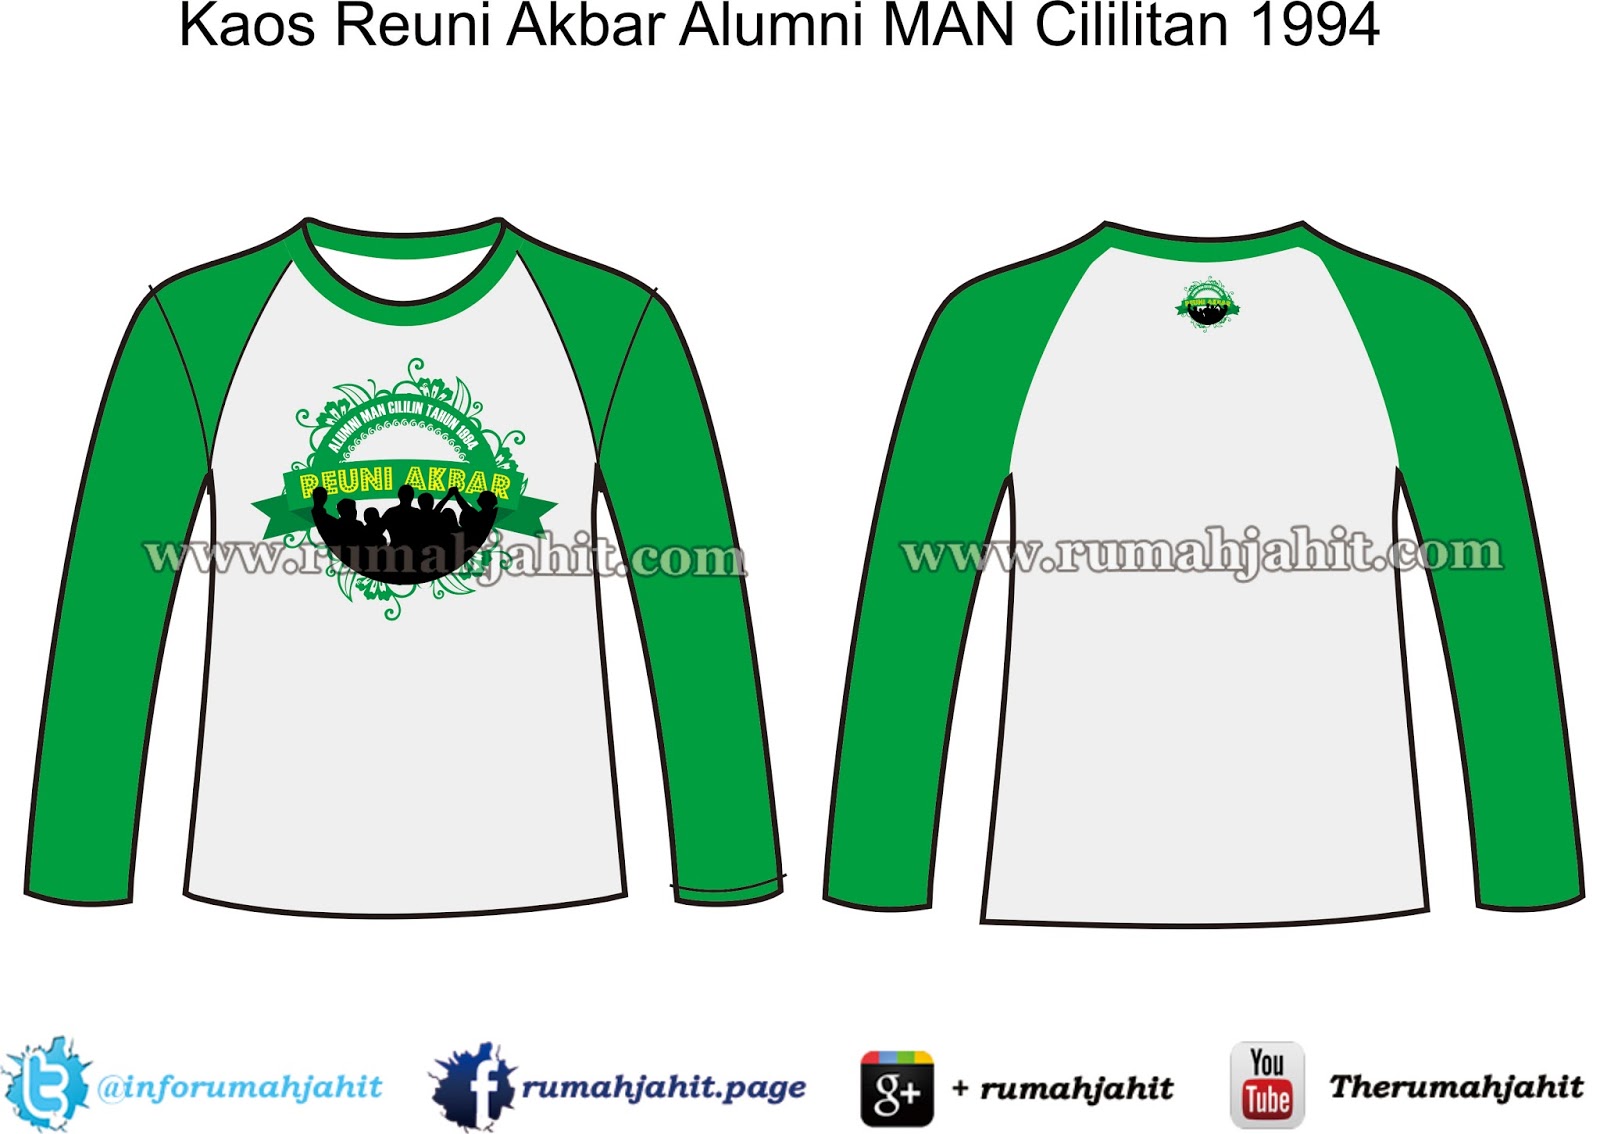 Kaos Reuni Akbar Alumni MAN Cililitan 1994 Laki Laki Desain